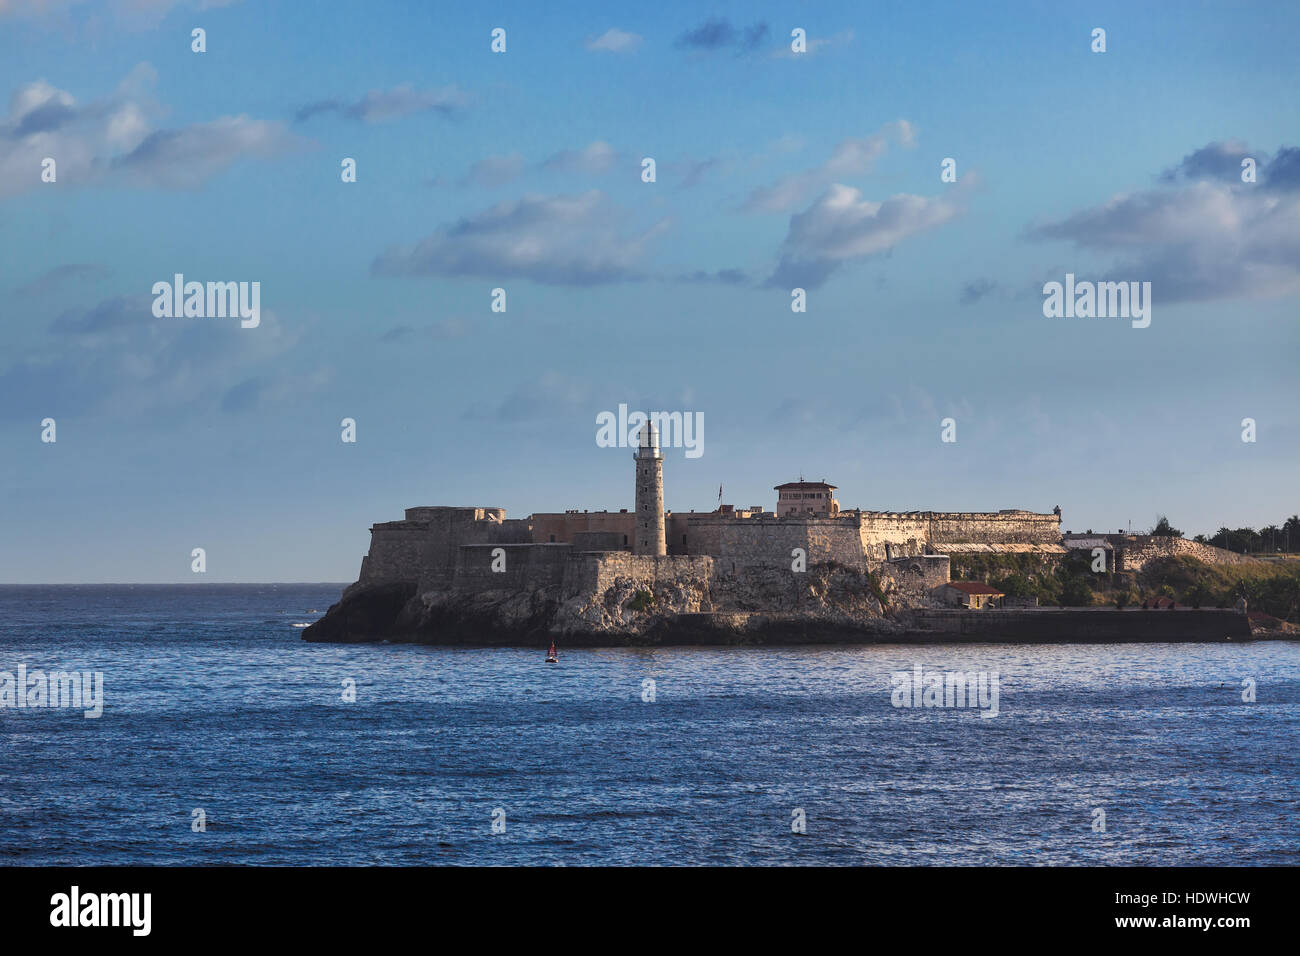 El morro castle havana harbor hi-res stock photography and images